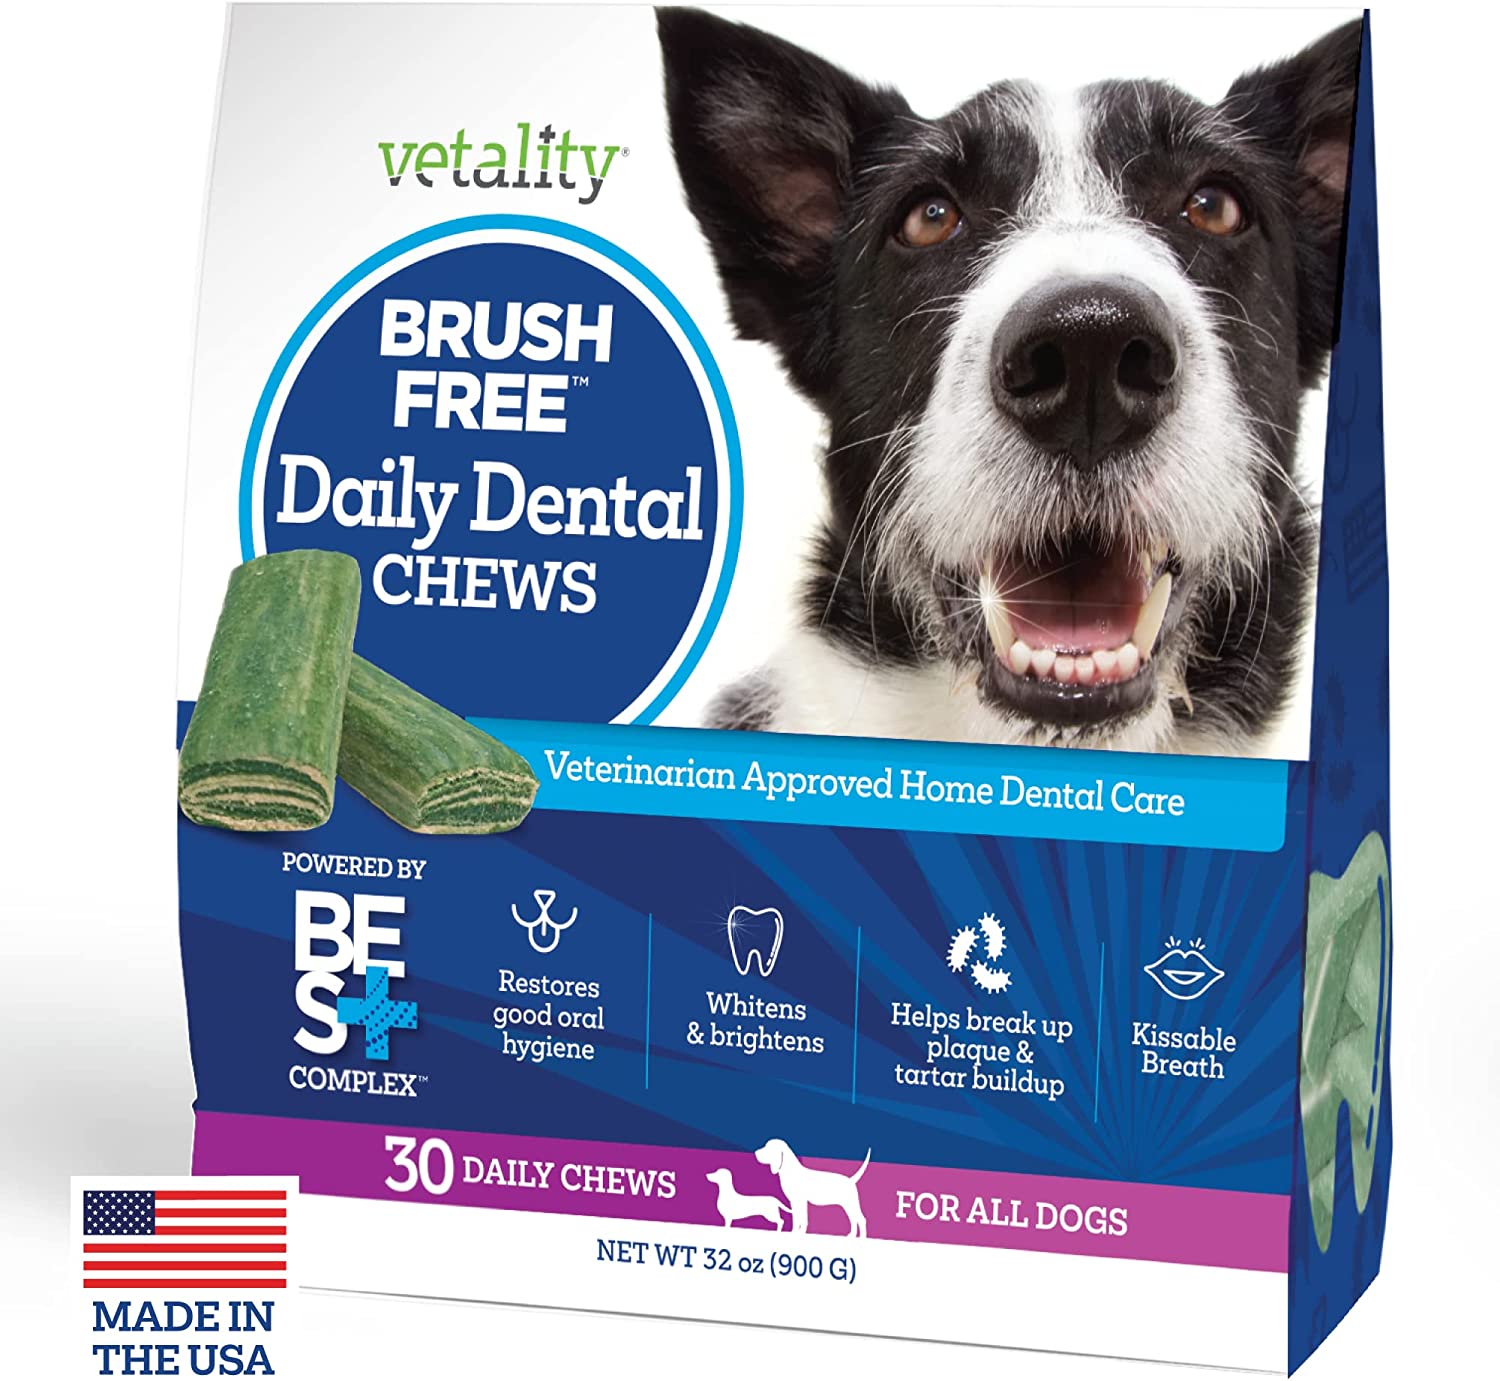 Vetality Brush Free Daily Dental Care Chews